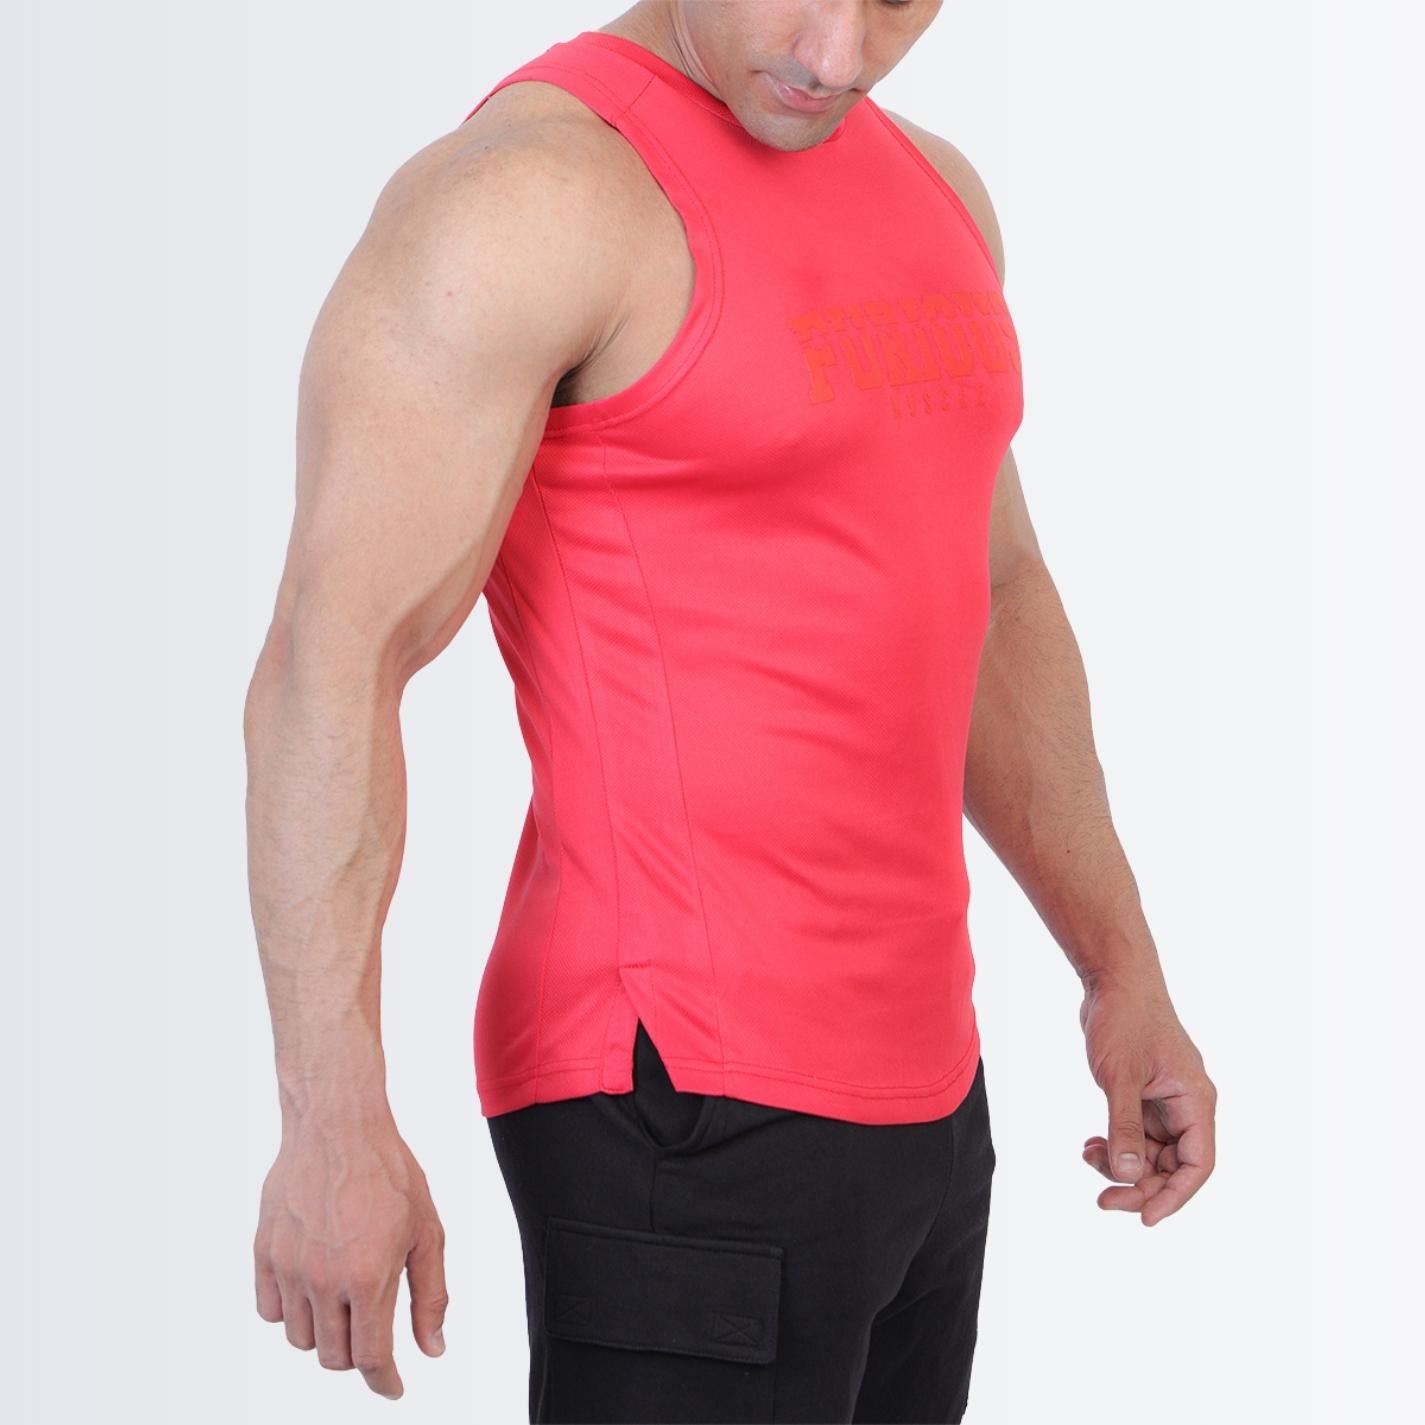 BALLER Muscle Tank Top Red - Gym Men's Singlet